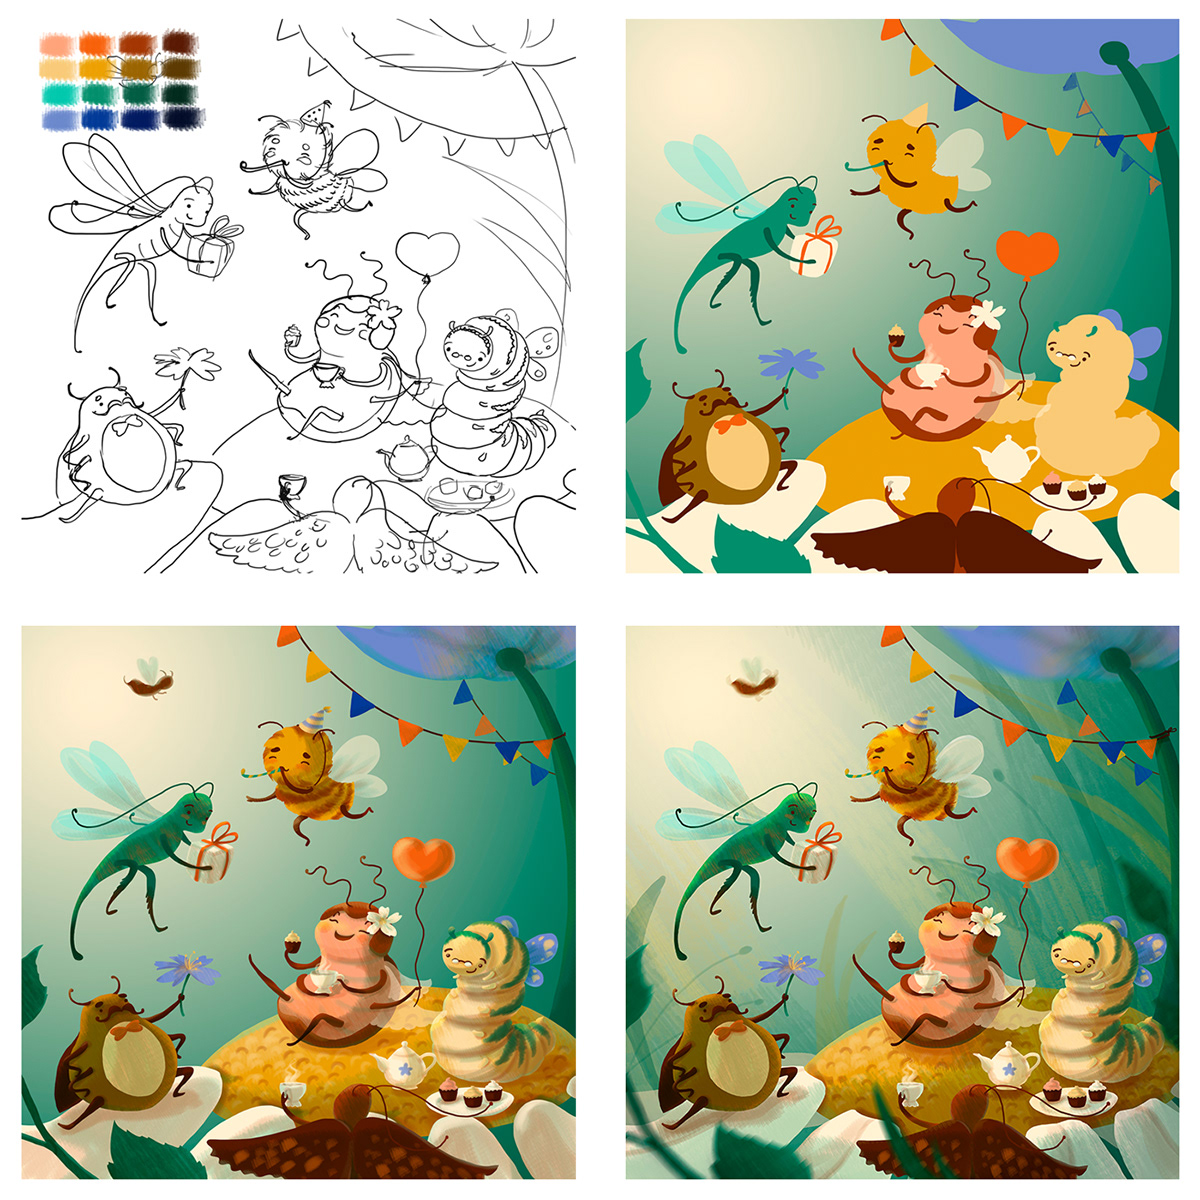 ILLUSTRATION  art digital children's book book children illustration kids illustration иллюстрация детская книга детская иллюстрация